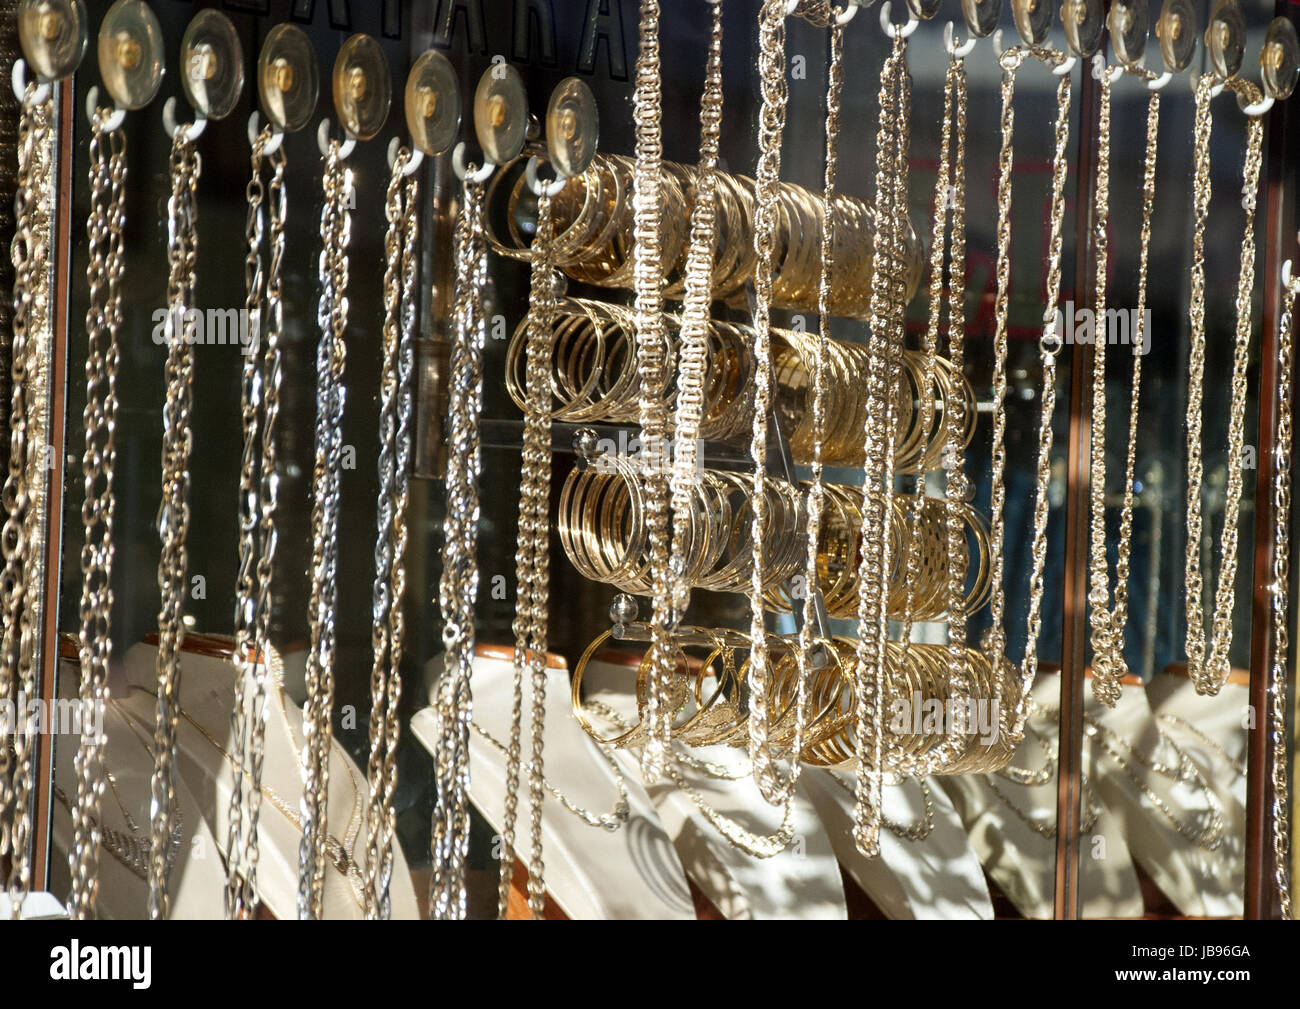 image of a Window display of jewelry shop, macedonian old turkish bazaar in  Skopje, Macedonia Stock Photo - Alamy